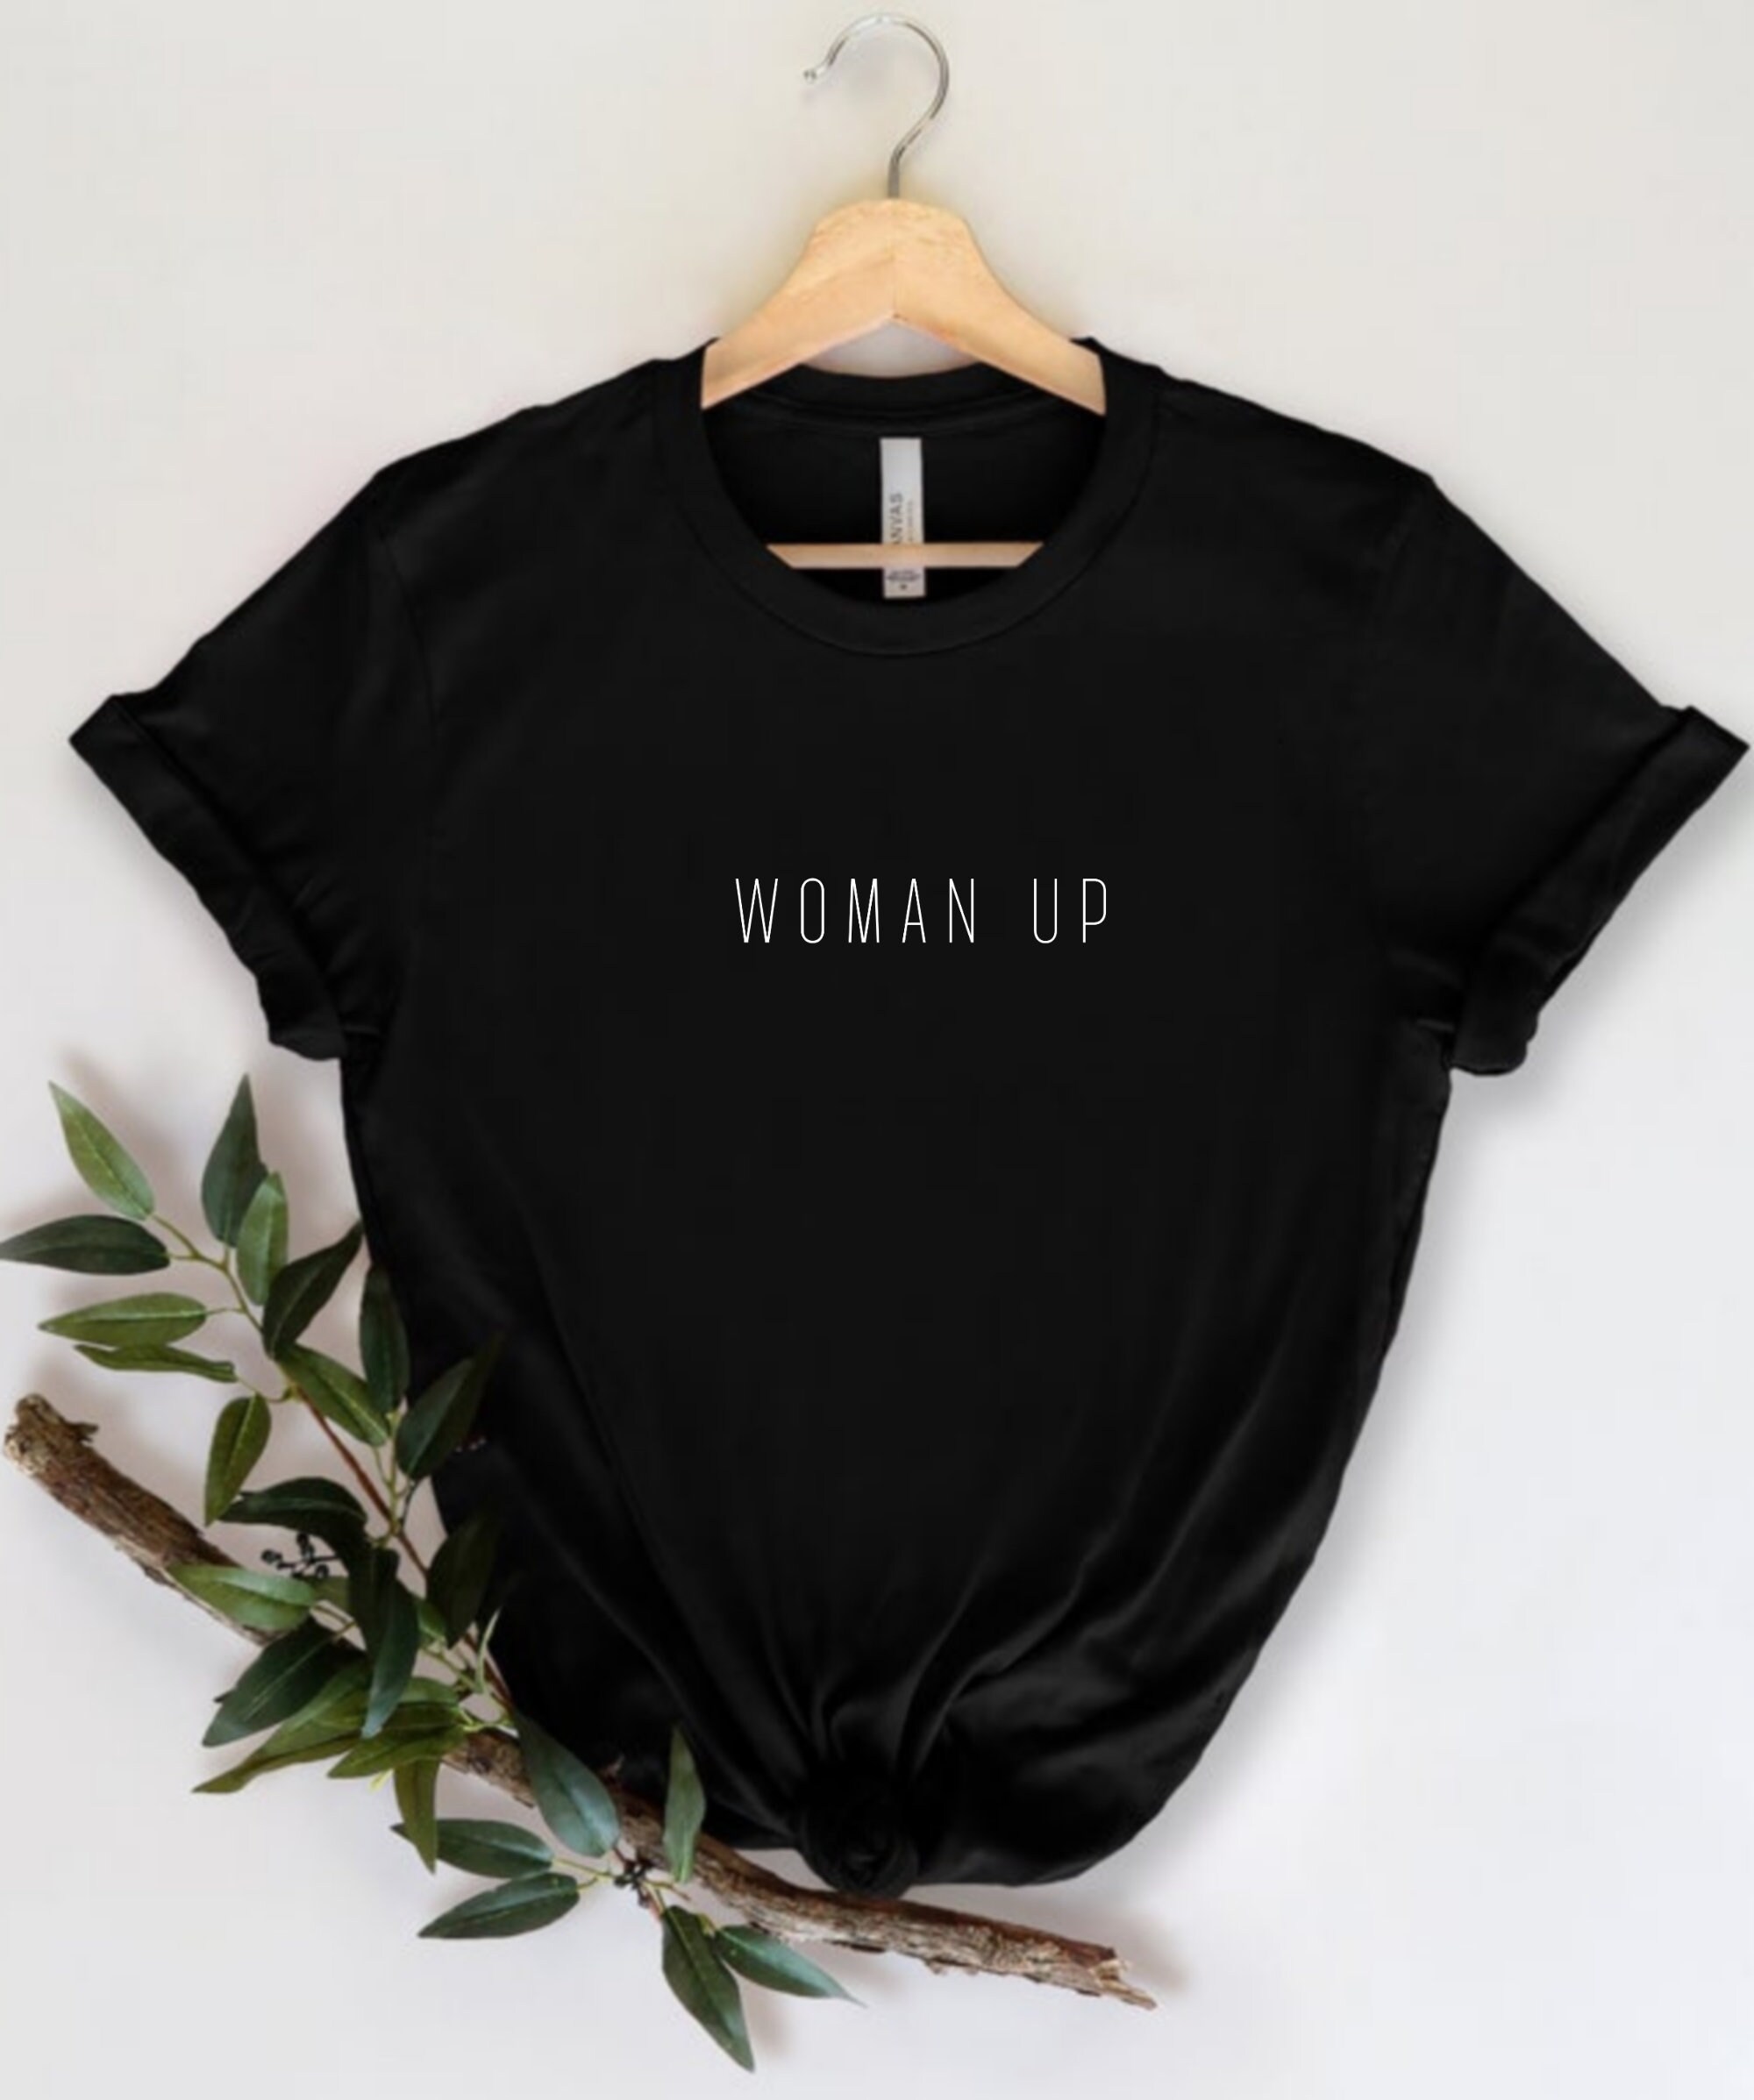 Discover Woman Up Shirt, Woman Up Tshirt, Feminist Shirt, Feminist Tee, Woman Power Shirt, Girl Power Shirt, Inspirational Shirt, Women Empowerment